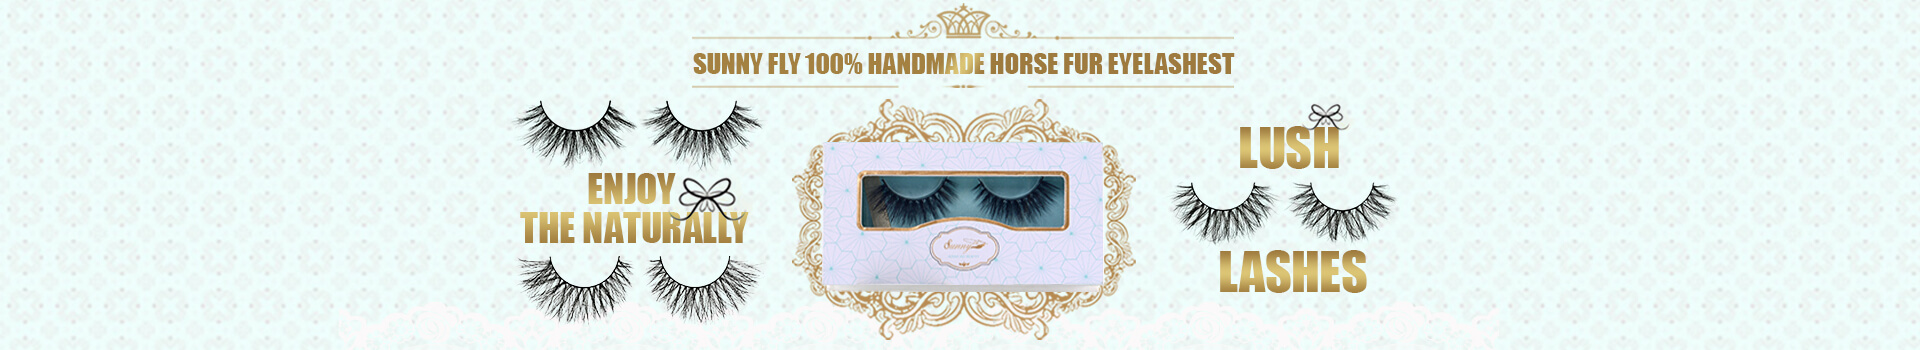 Real Horse Fur Eyesashes HF19